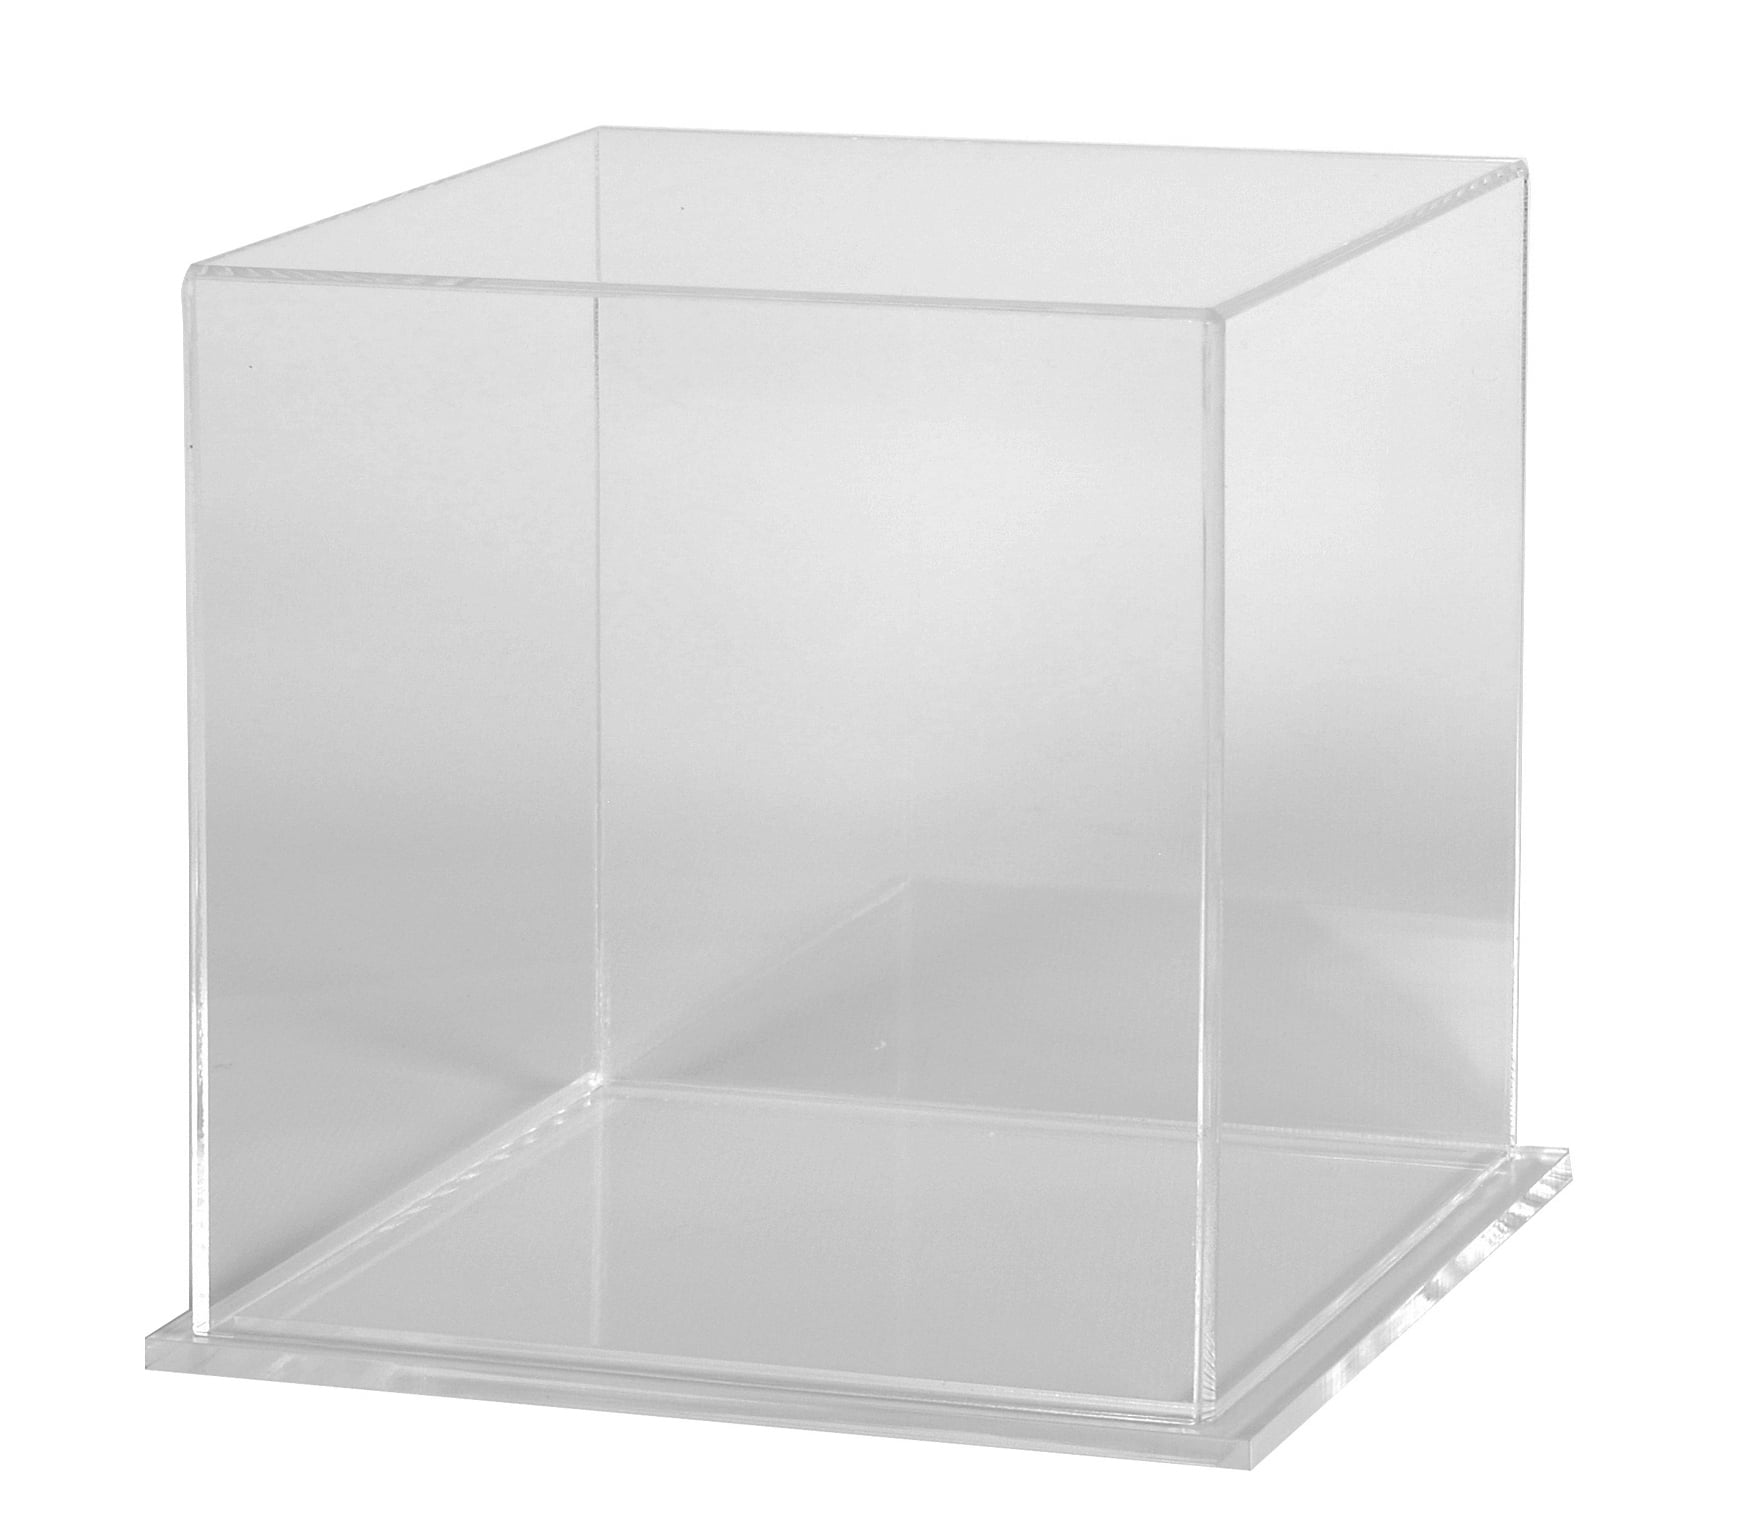 Medium Clear Acrylique Display Box Case Poussière dense protection Toy decor 